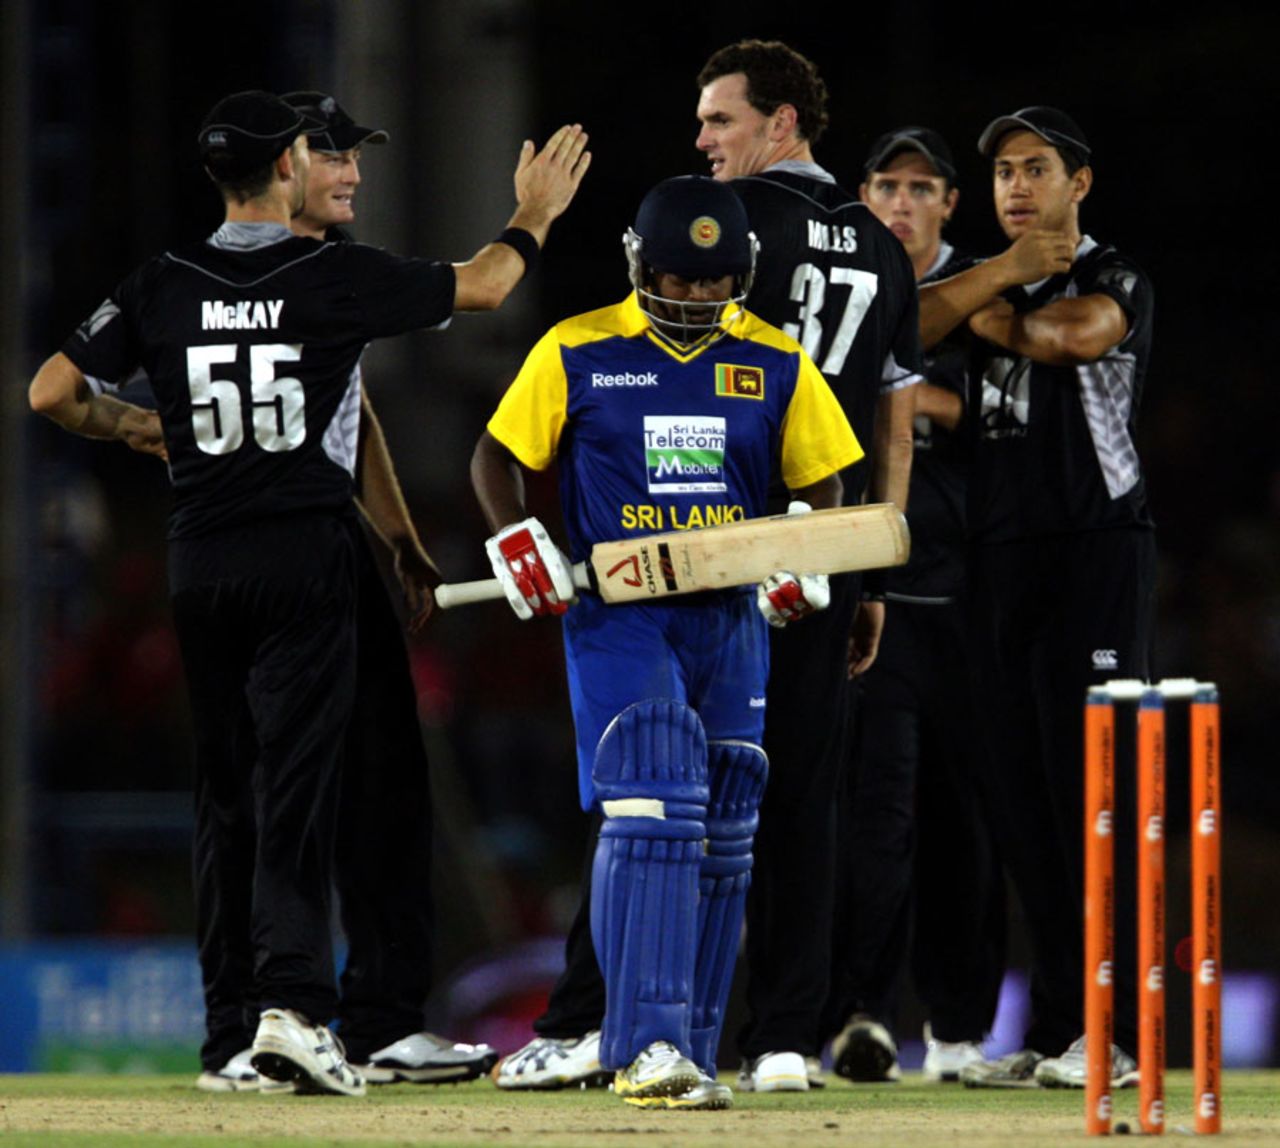 Kyle Mills is congratulated by his team-mates after dismissing Rangana Herath, Sri Lanka v New Zealand, tri-series, 2nd ODI, Dambulla, August 13, 2010